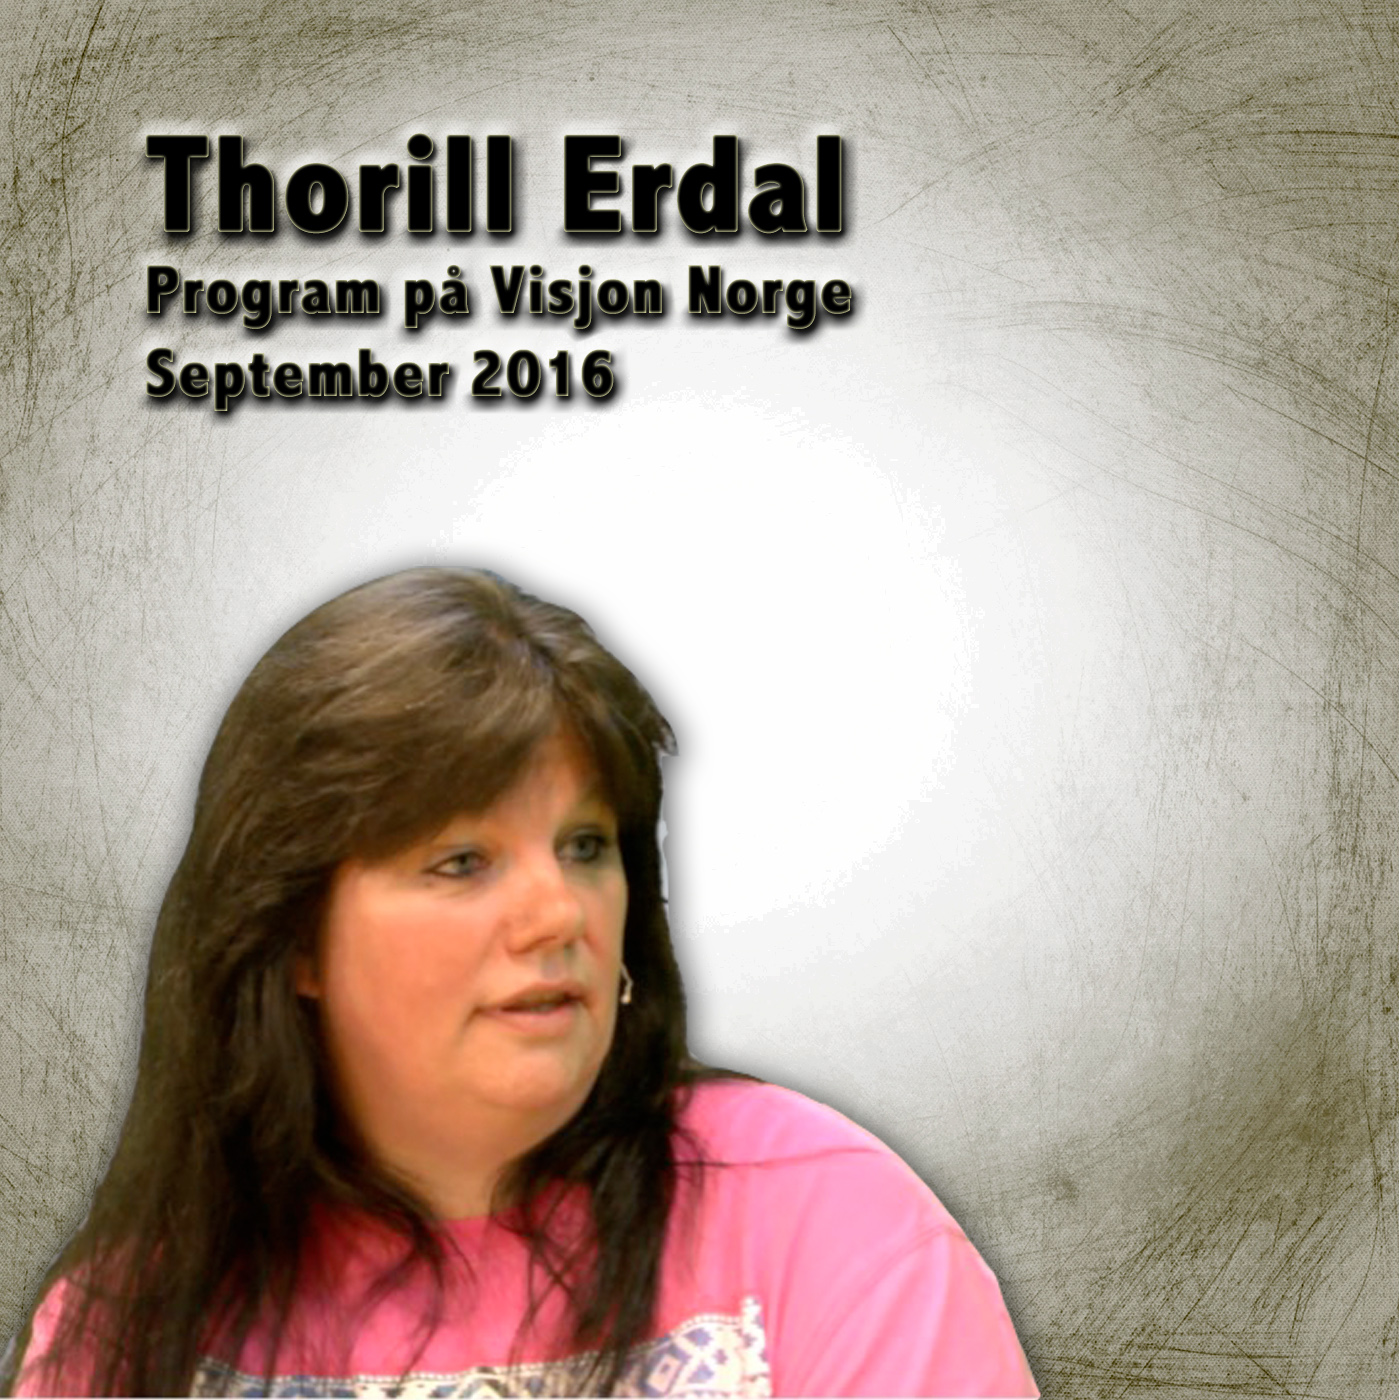 Thorill Erdal